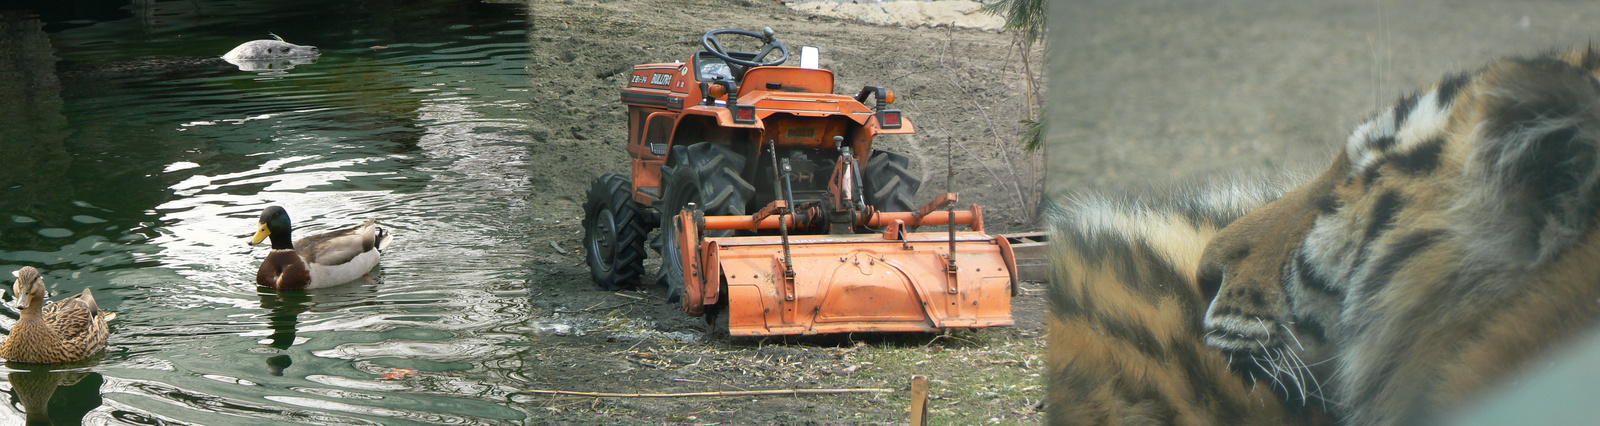 traktor tigrincs kacsa stich